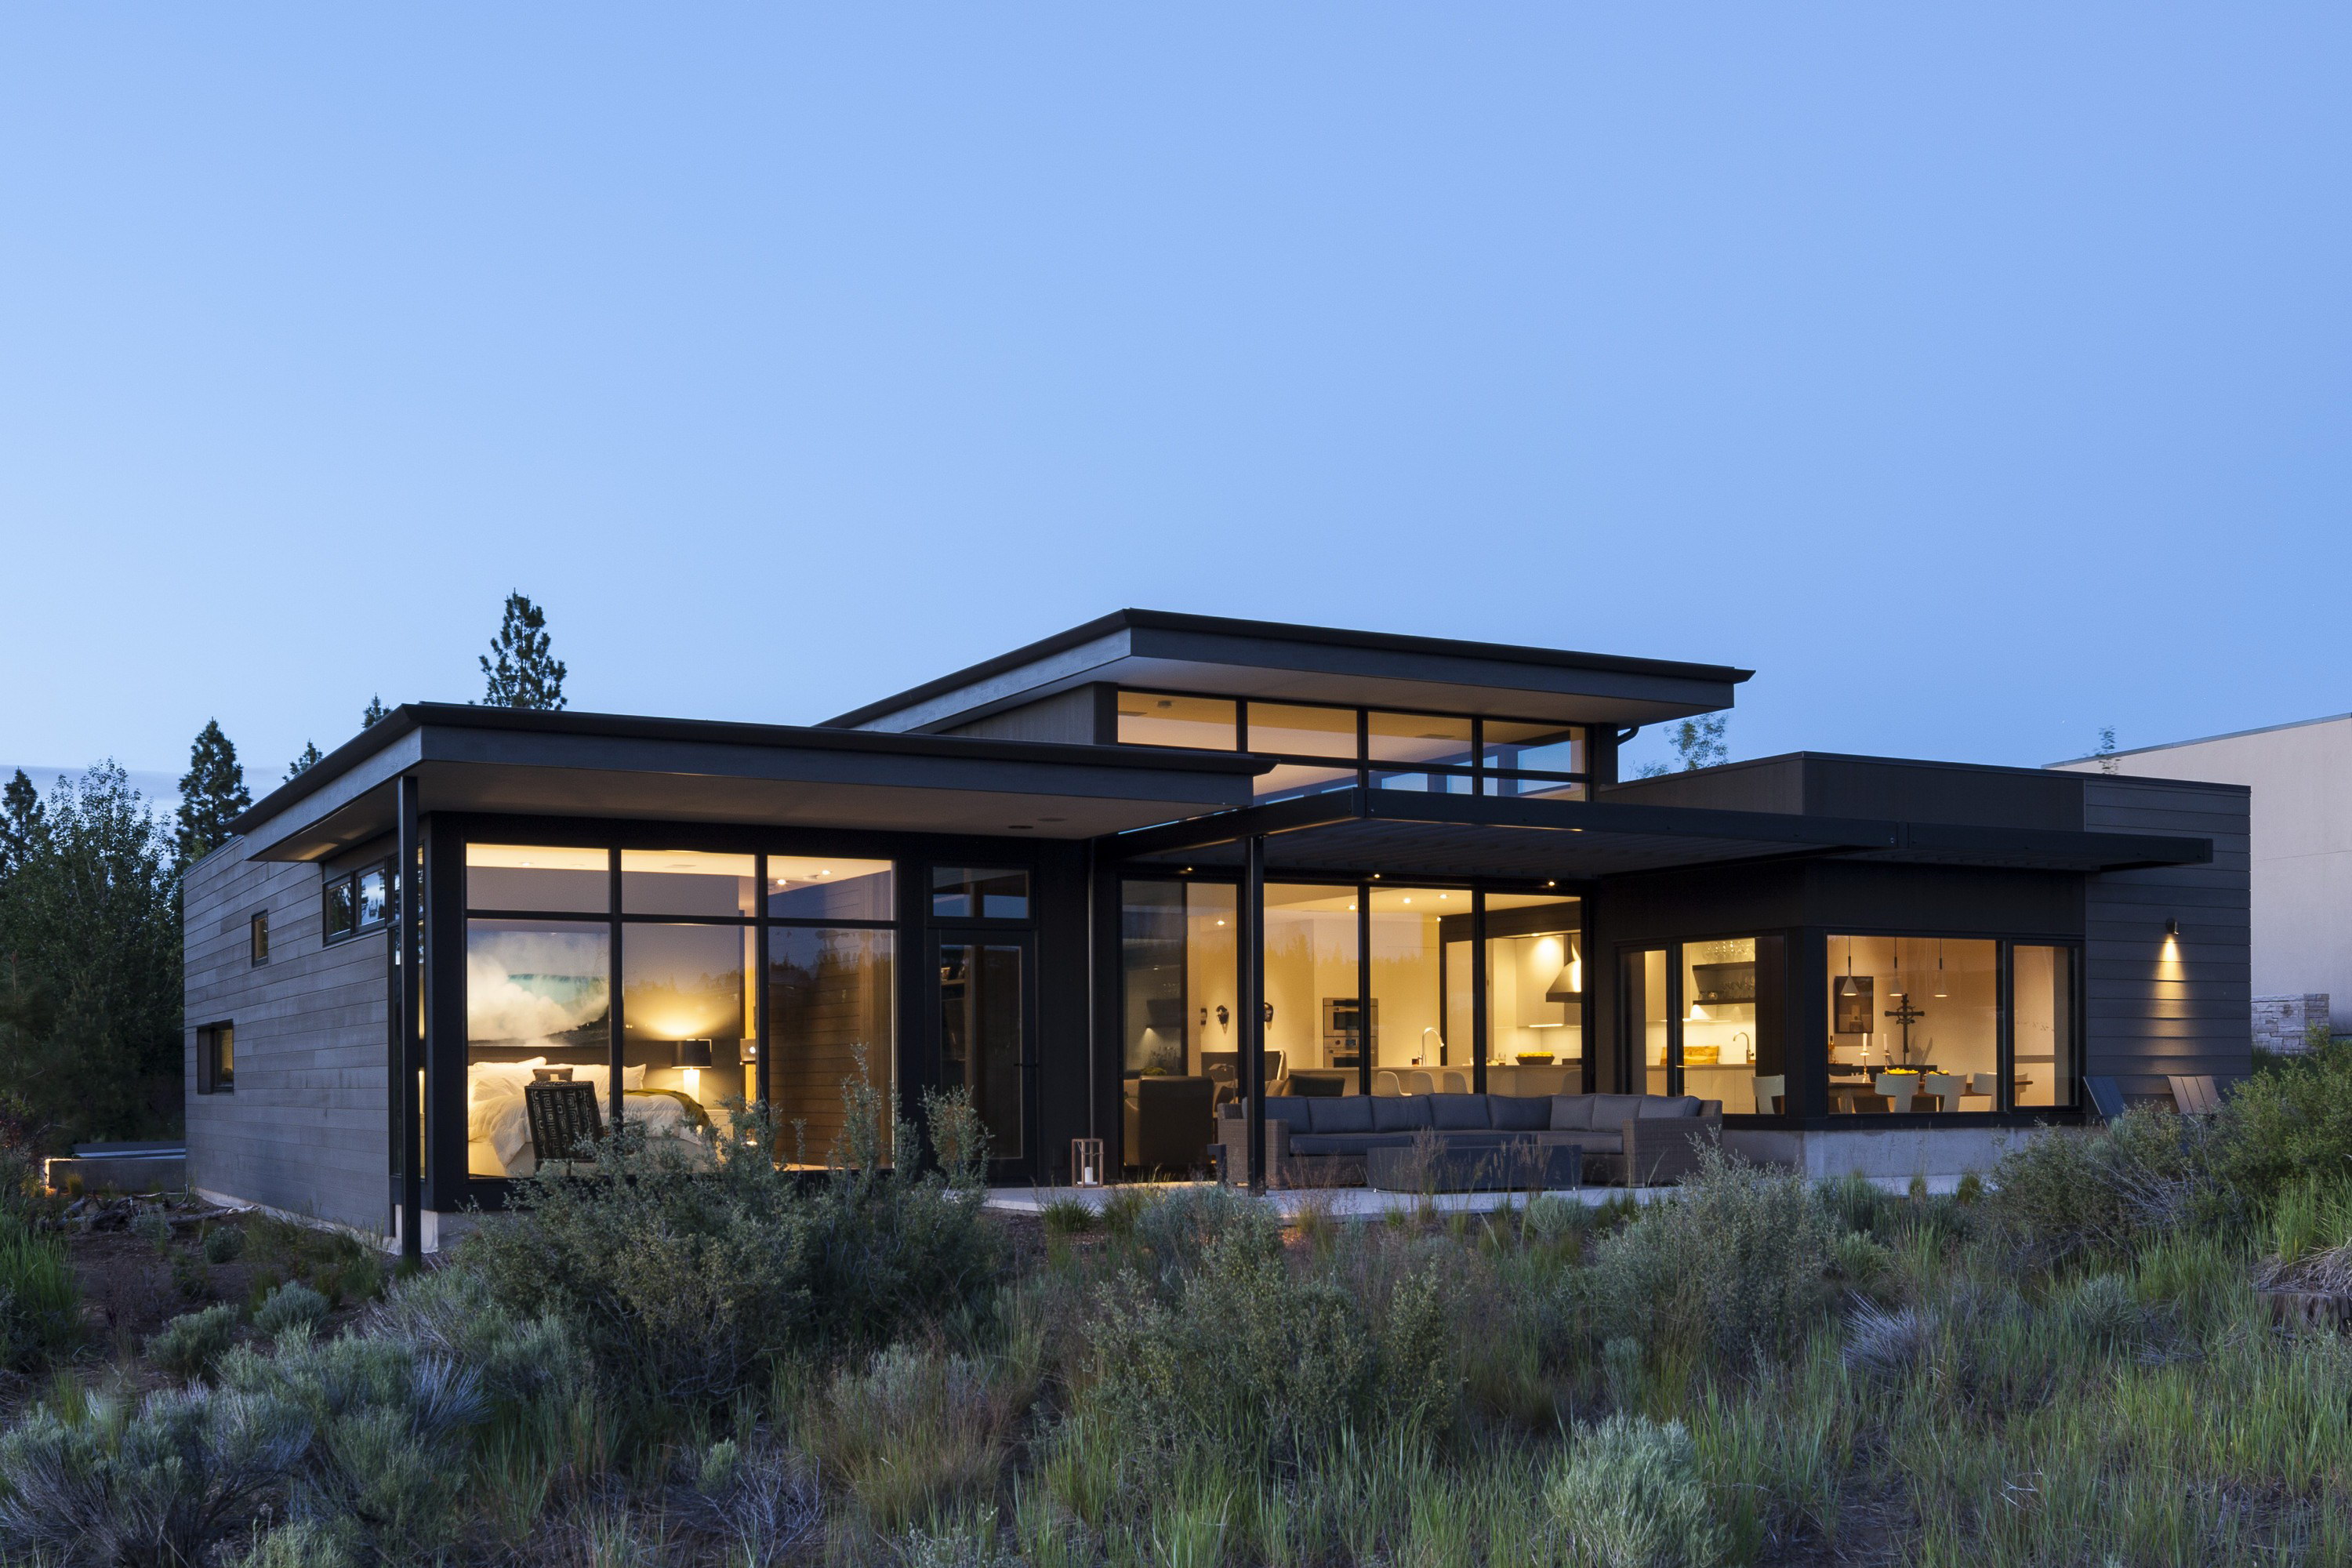 High Desert Modern – Home Built Like a Swiss Army Knife